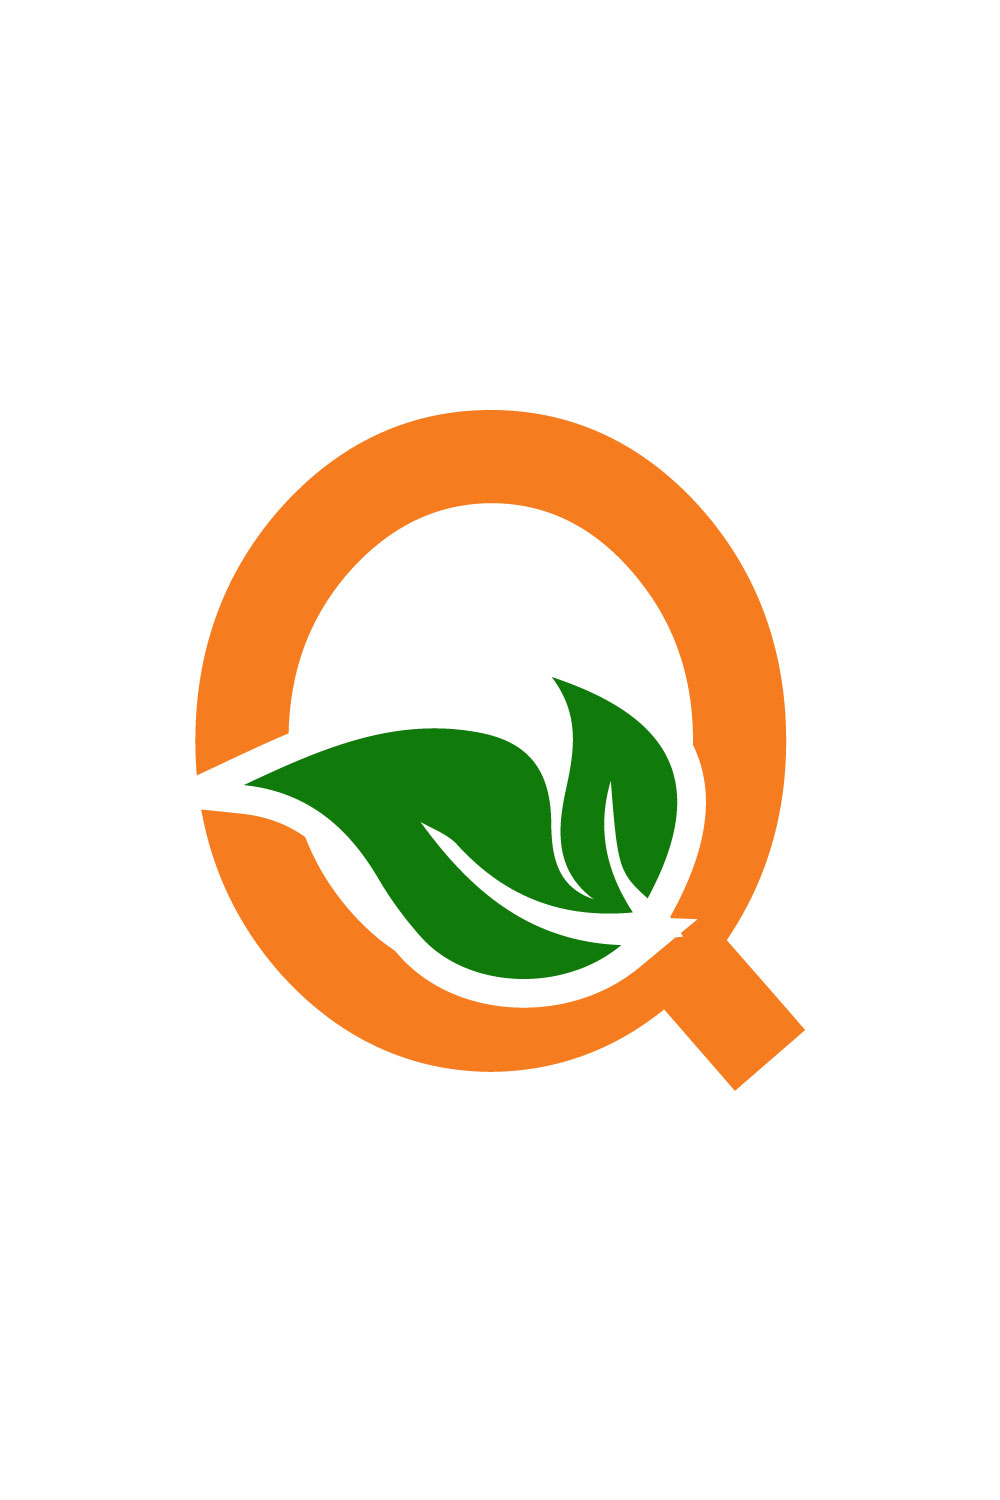 Free Q retro typography logo pinterest preview image.